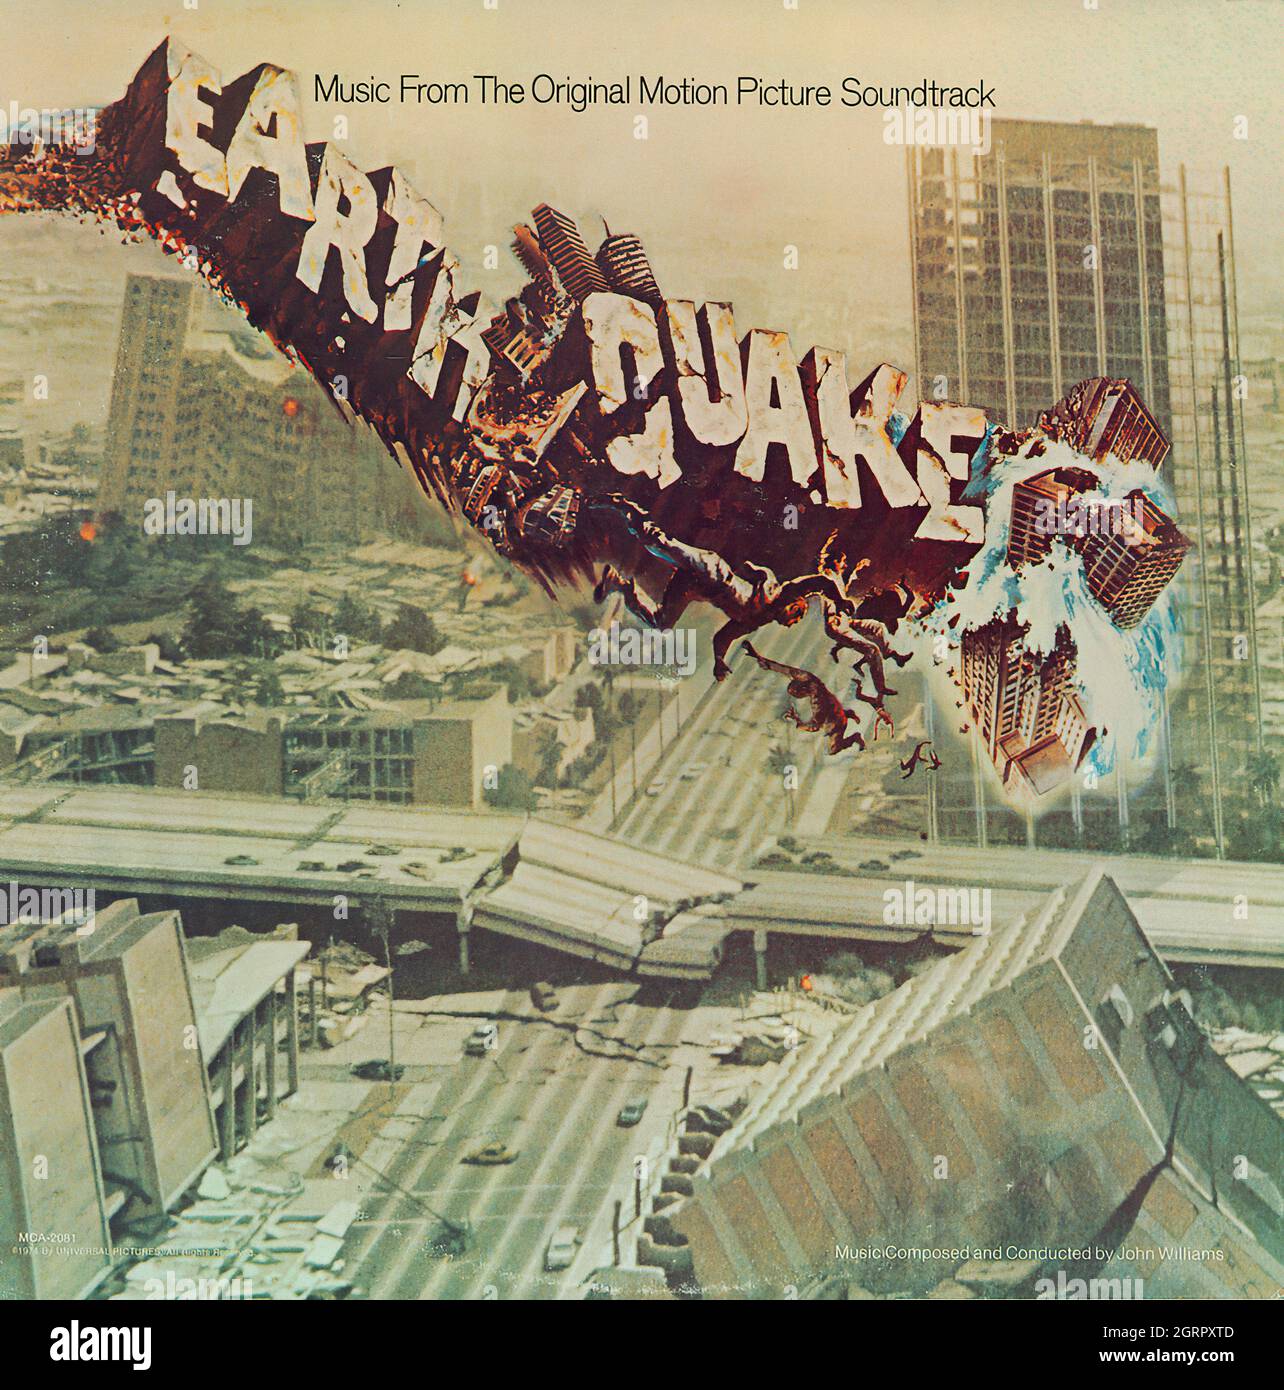 Earthquake - Vintage Soundtrack Vinyl Album Stock Photo